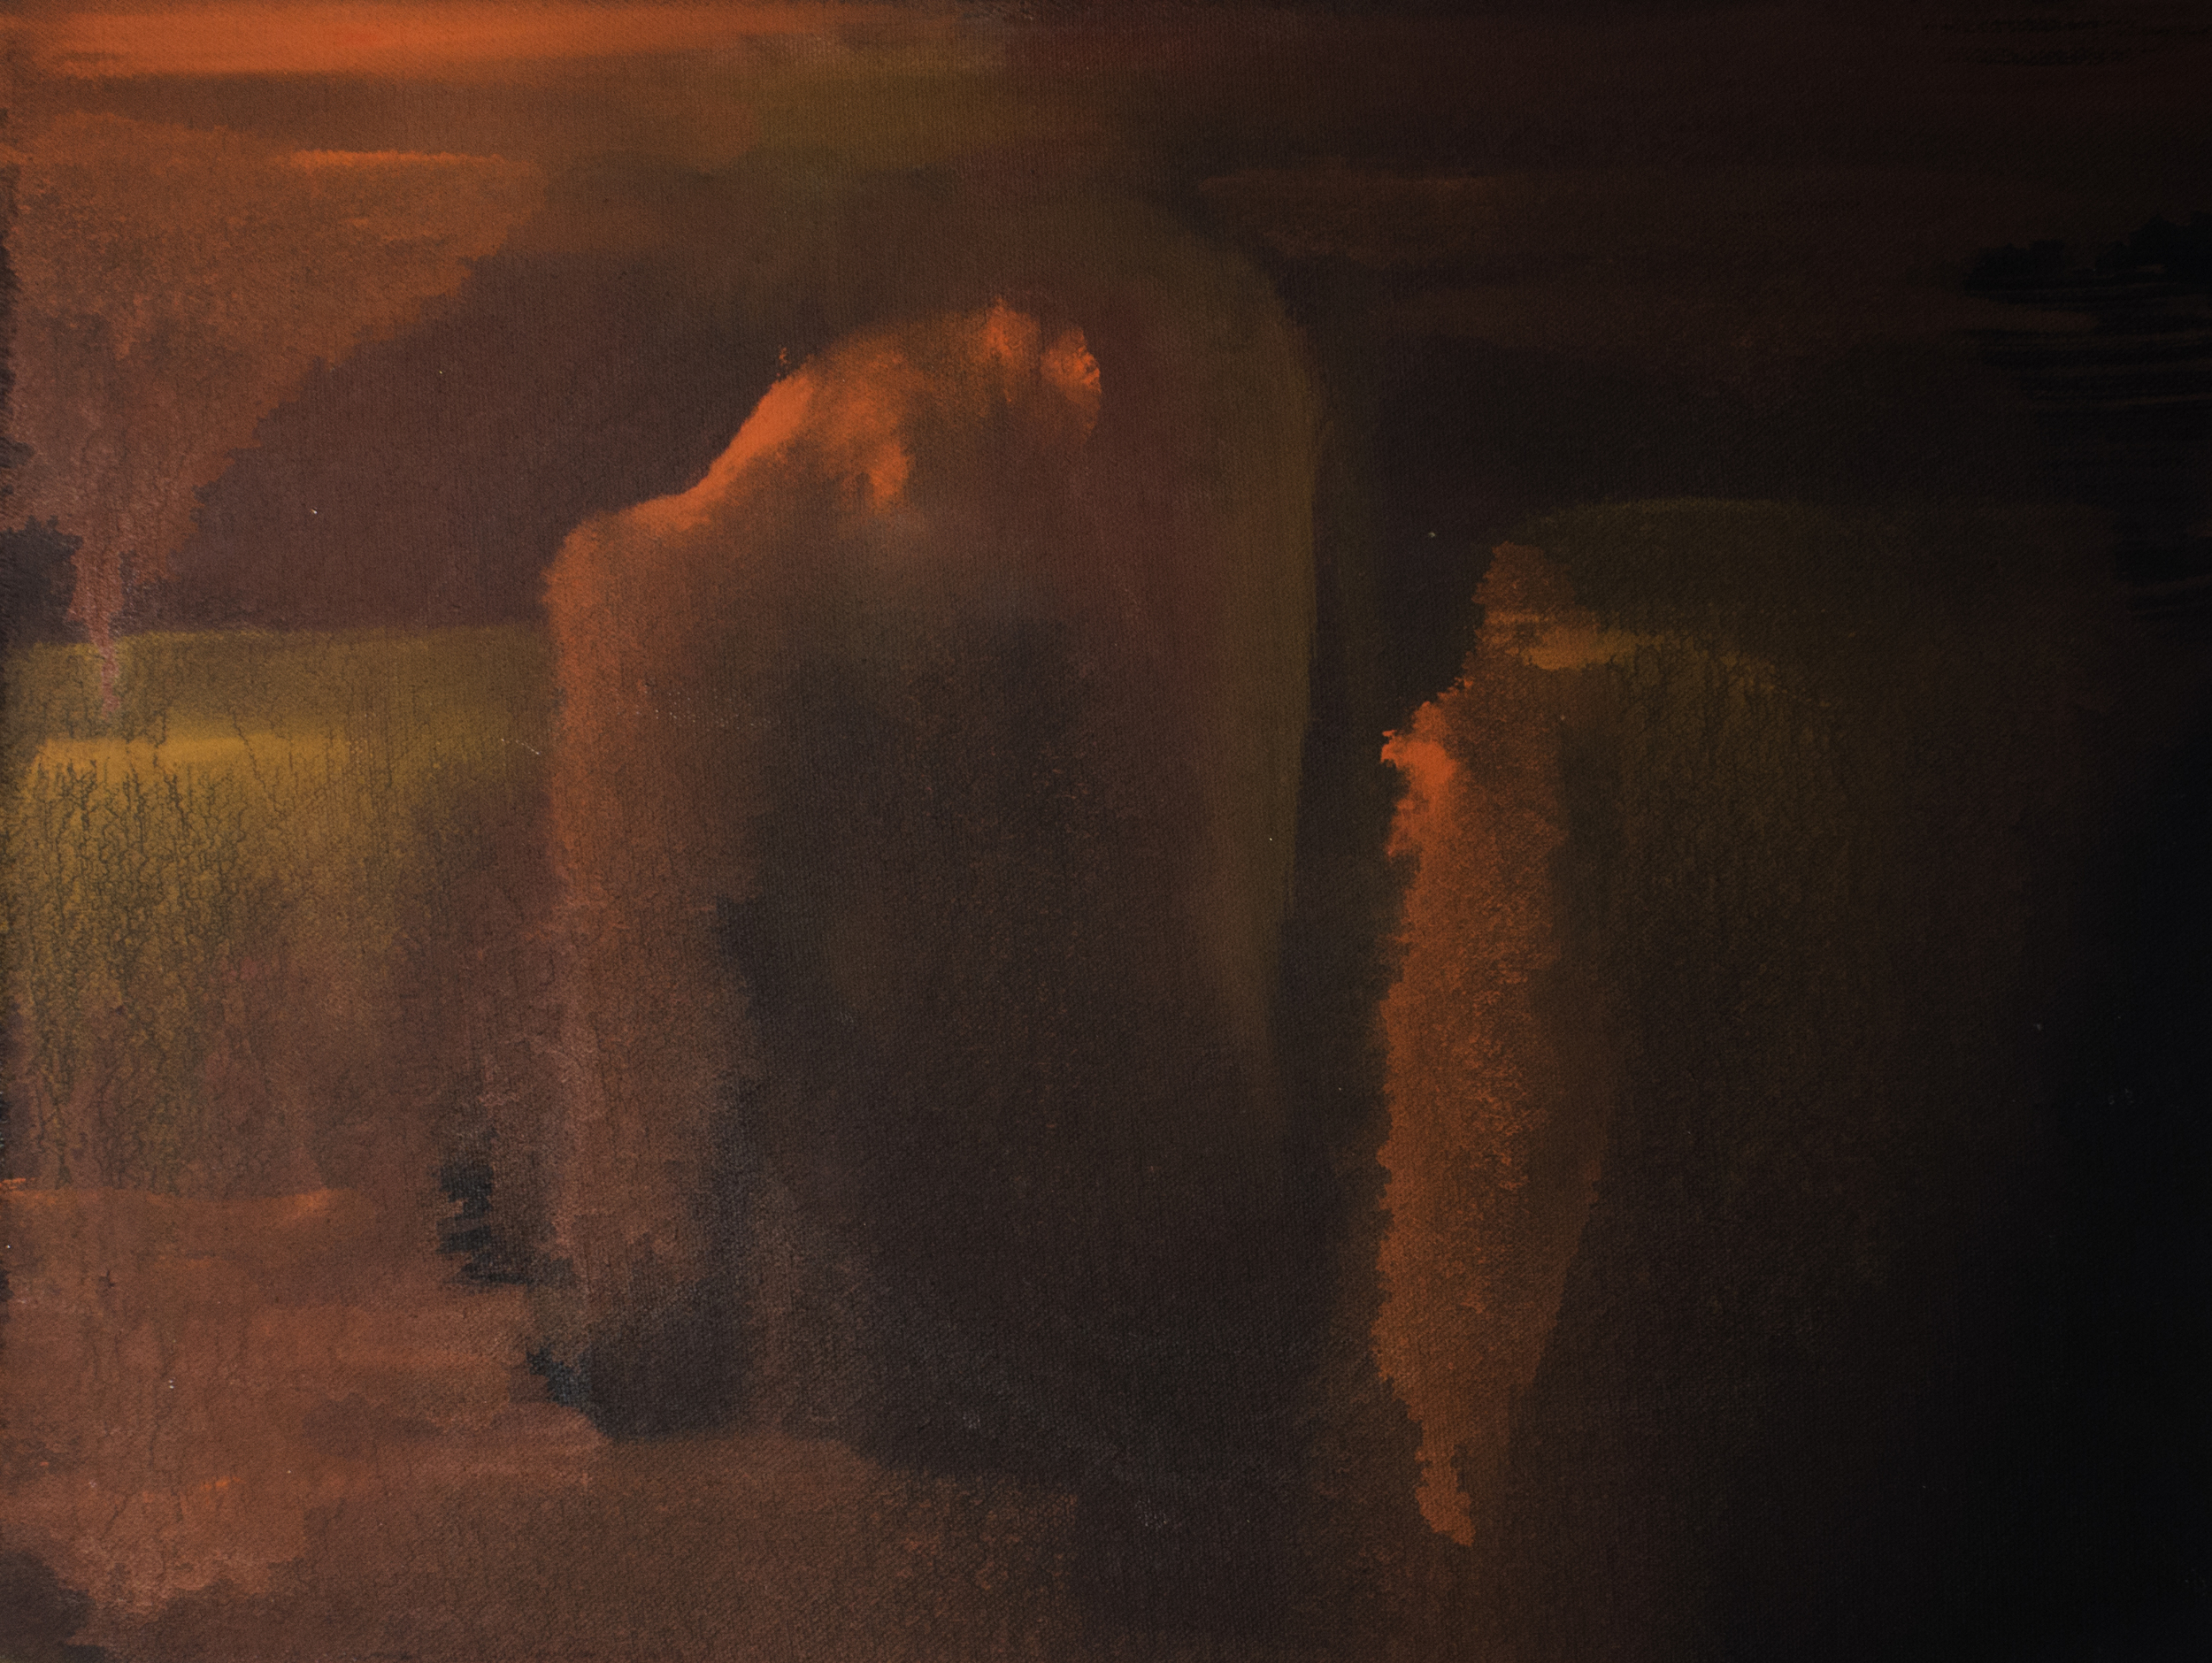   Study,  2014  12” x 18” | Oil on canvas 